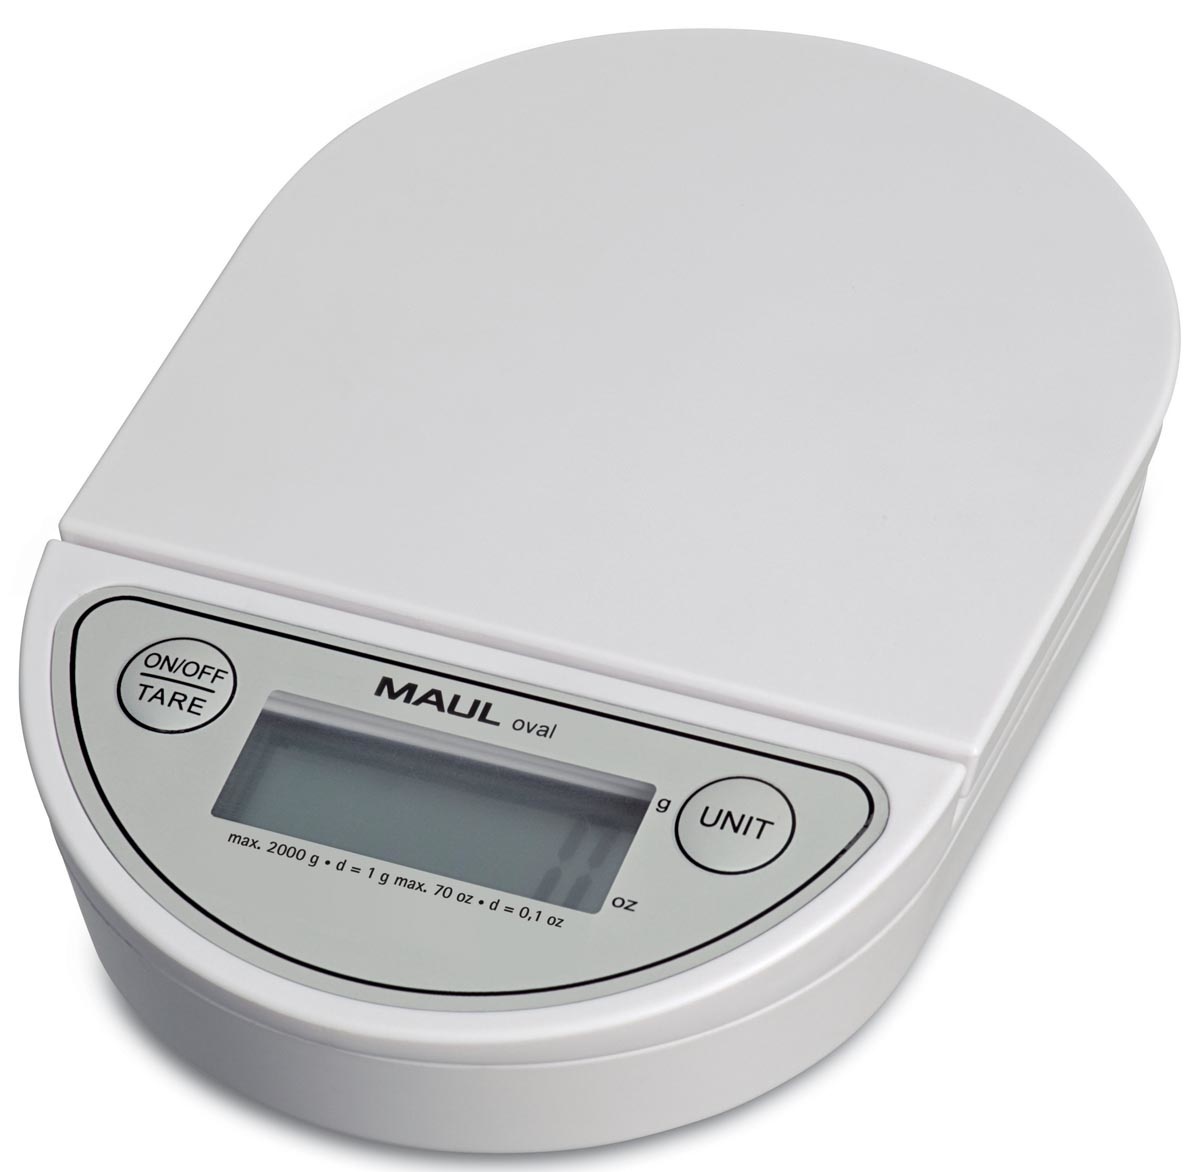 MAUL - balance postale - ovale 2 kg ( /1gr)- batterie incluse - blanc 